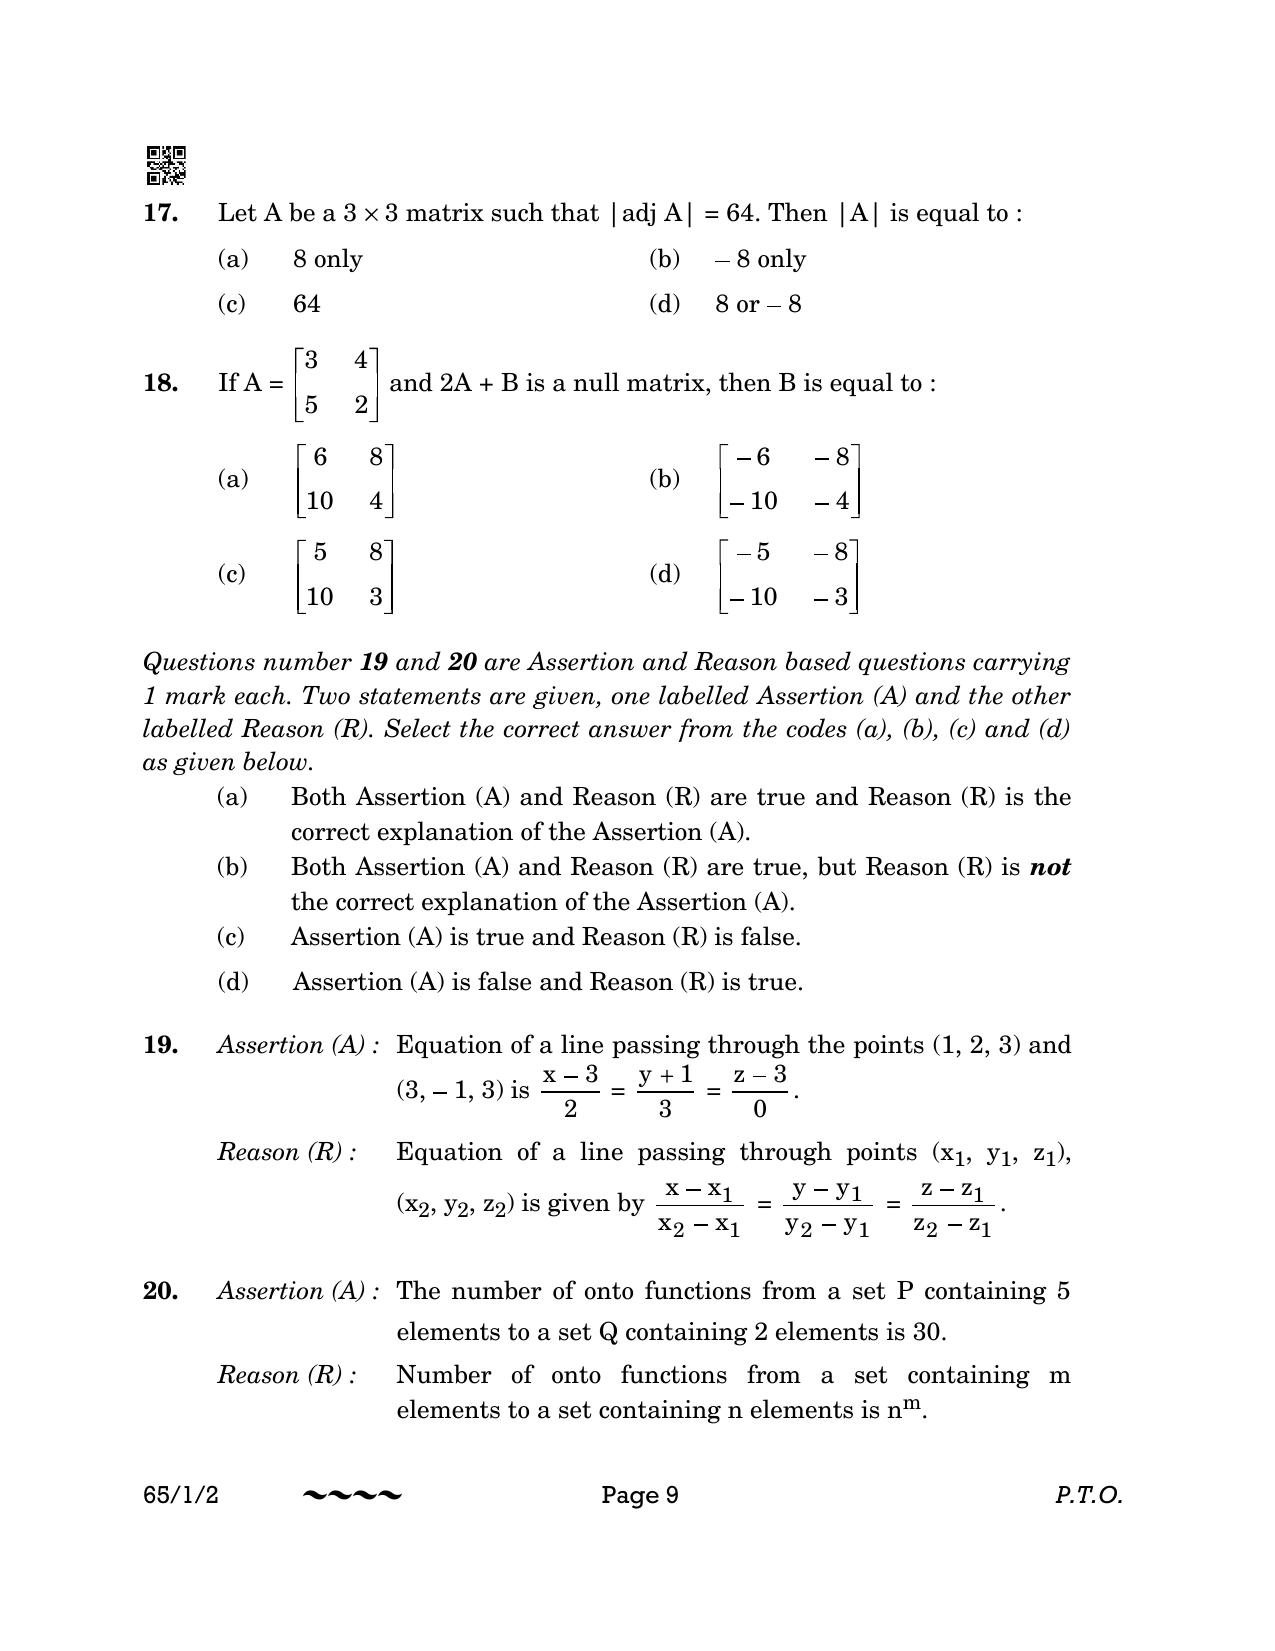 CBSE Class 12 65-1-2 MATHEMATICS 2023 Question Paper - Page 9